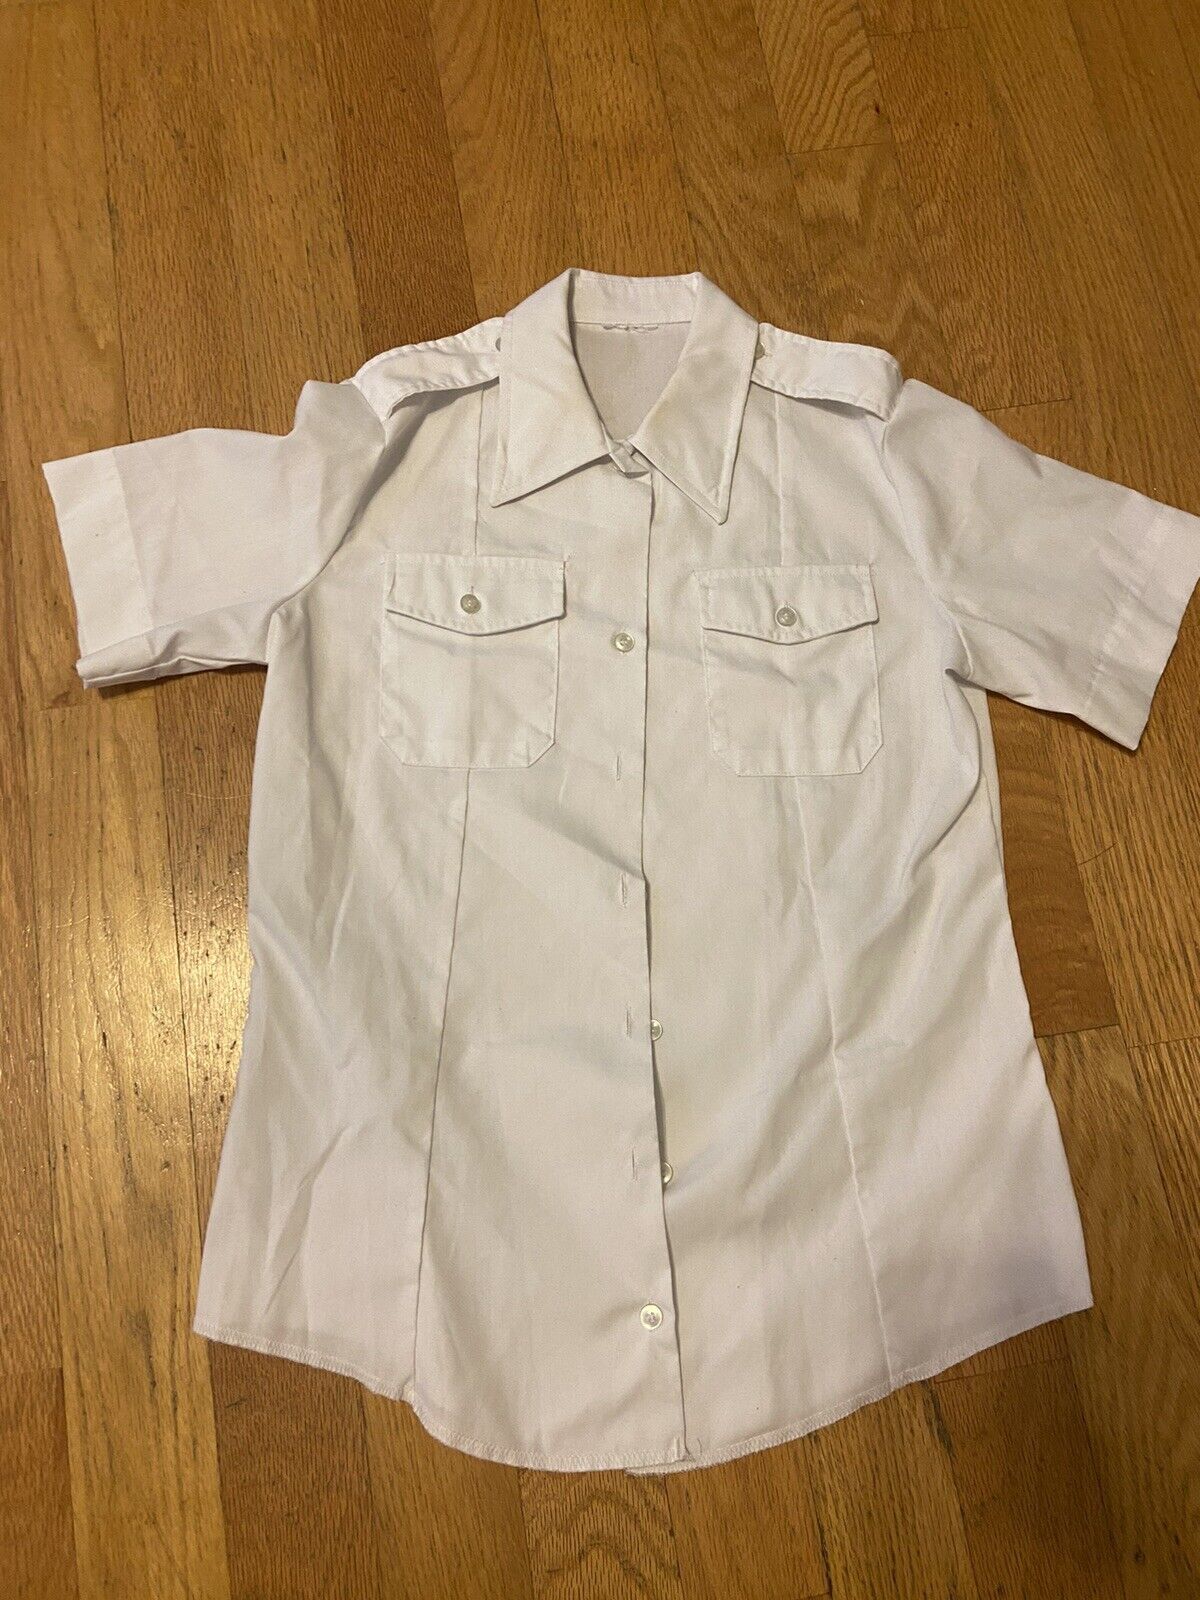 US Navy White Shirt Women's Short Half Sleeve Service Dress